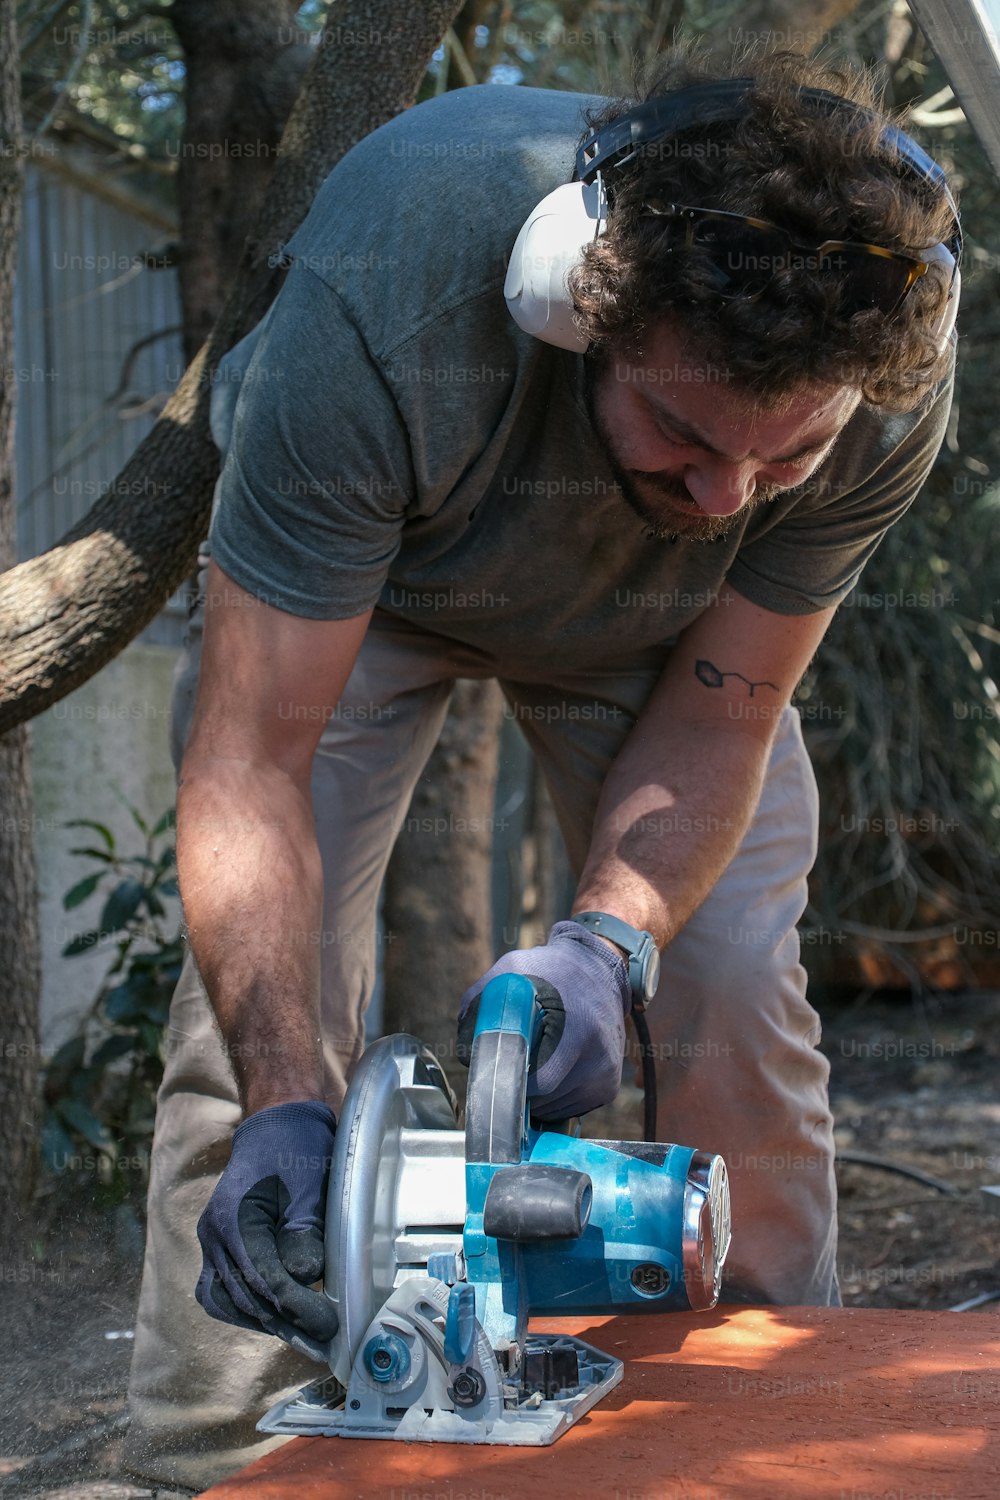 a man using a circular saw to cut a piece of wood